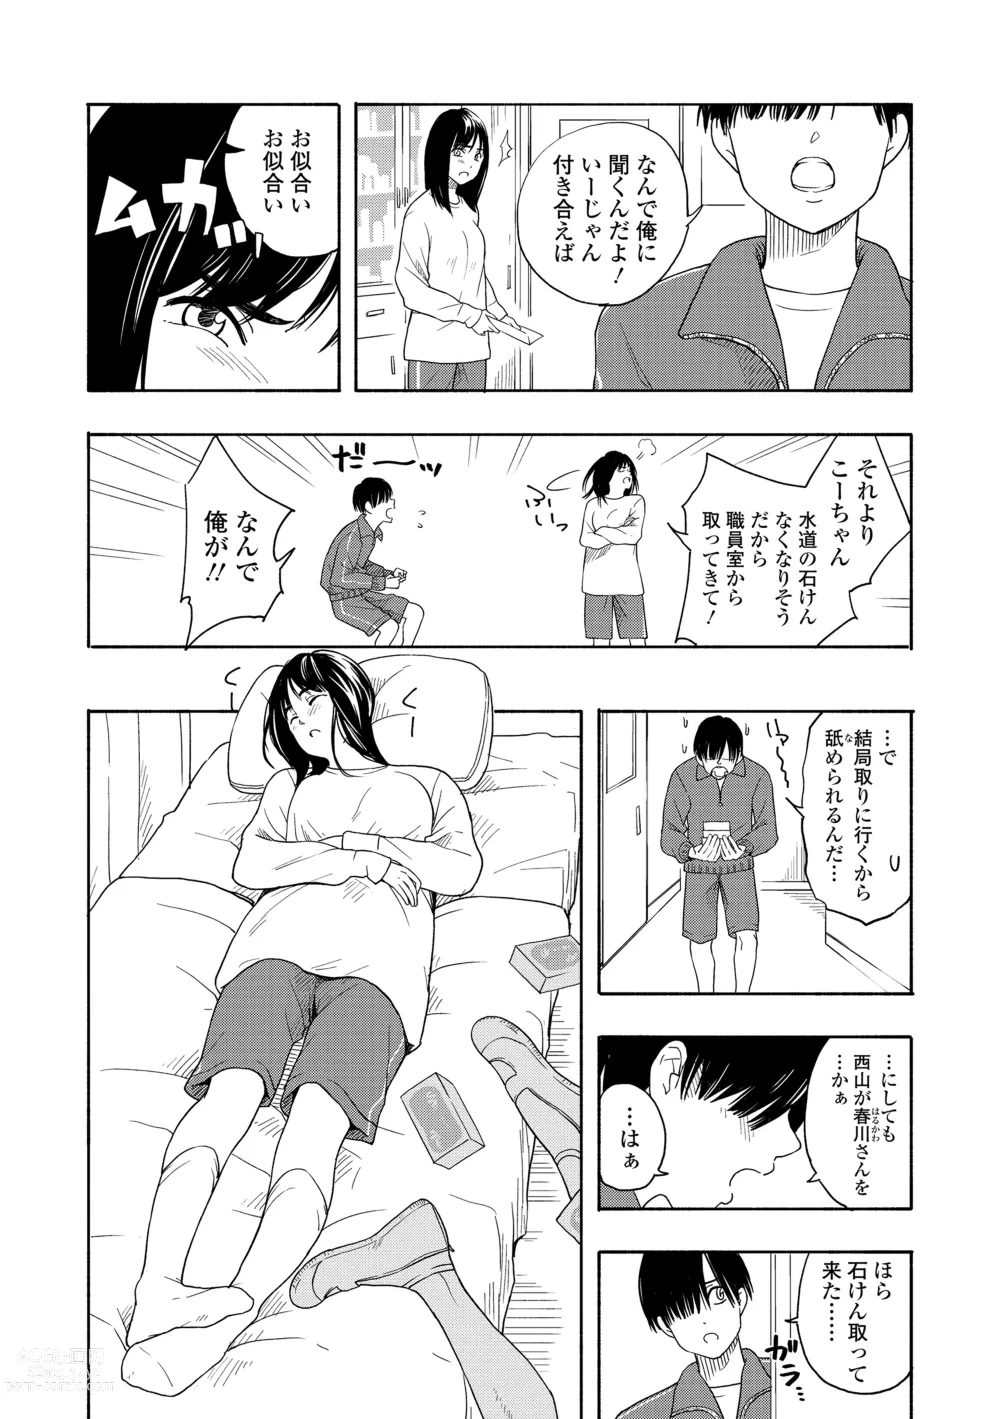 Page 30 of manga Shishunki no Eros - puberty eros + DLsite Kounyu Tokuten